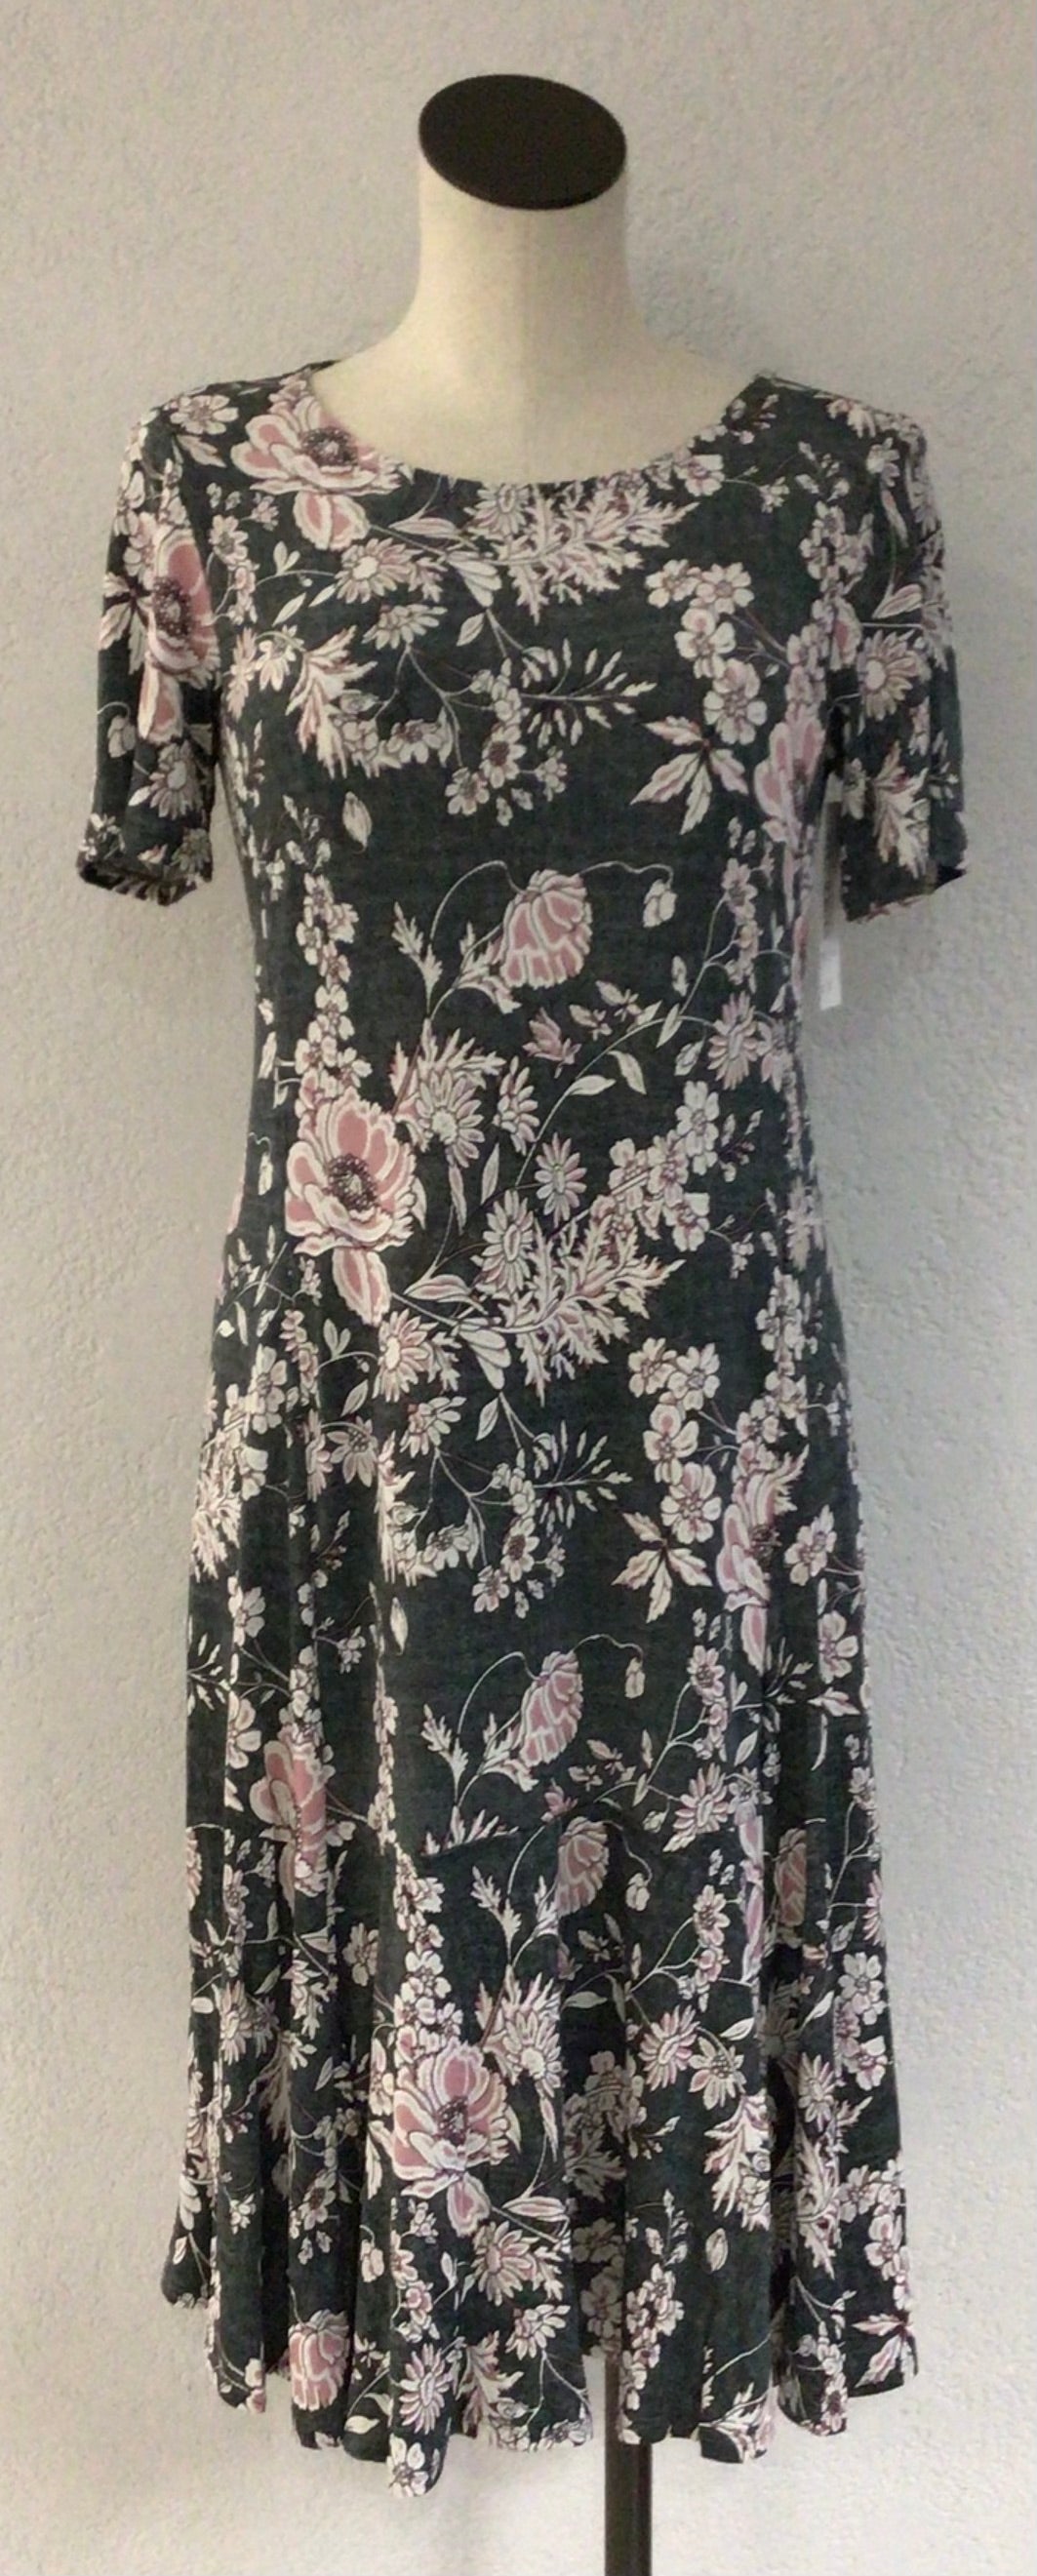 Southern Lady Grey and Pink Print Dress 6293